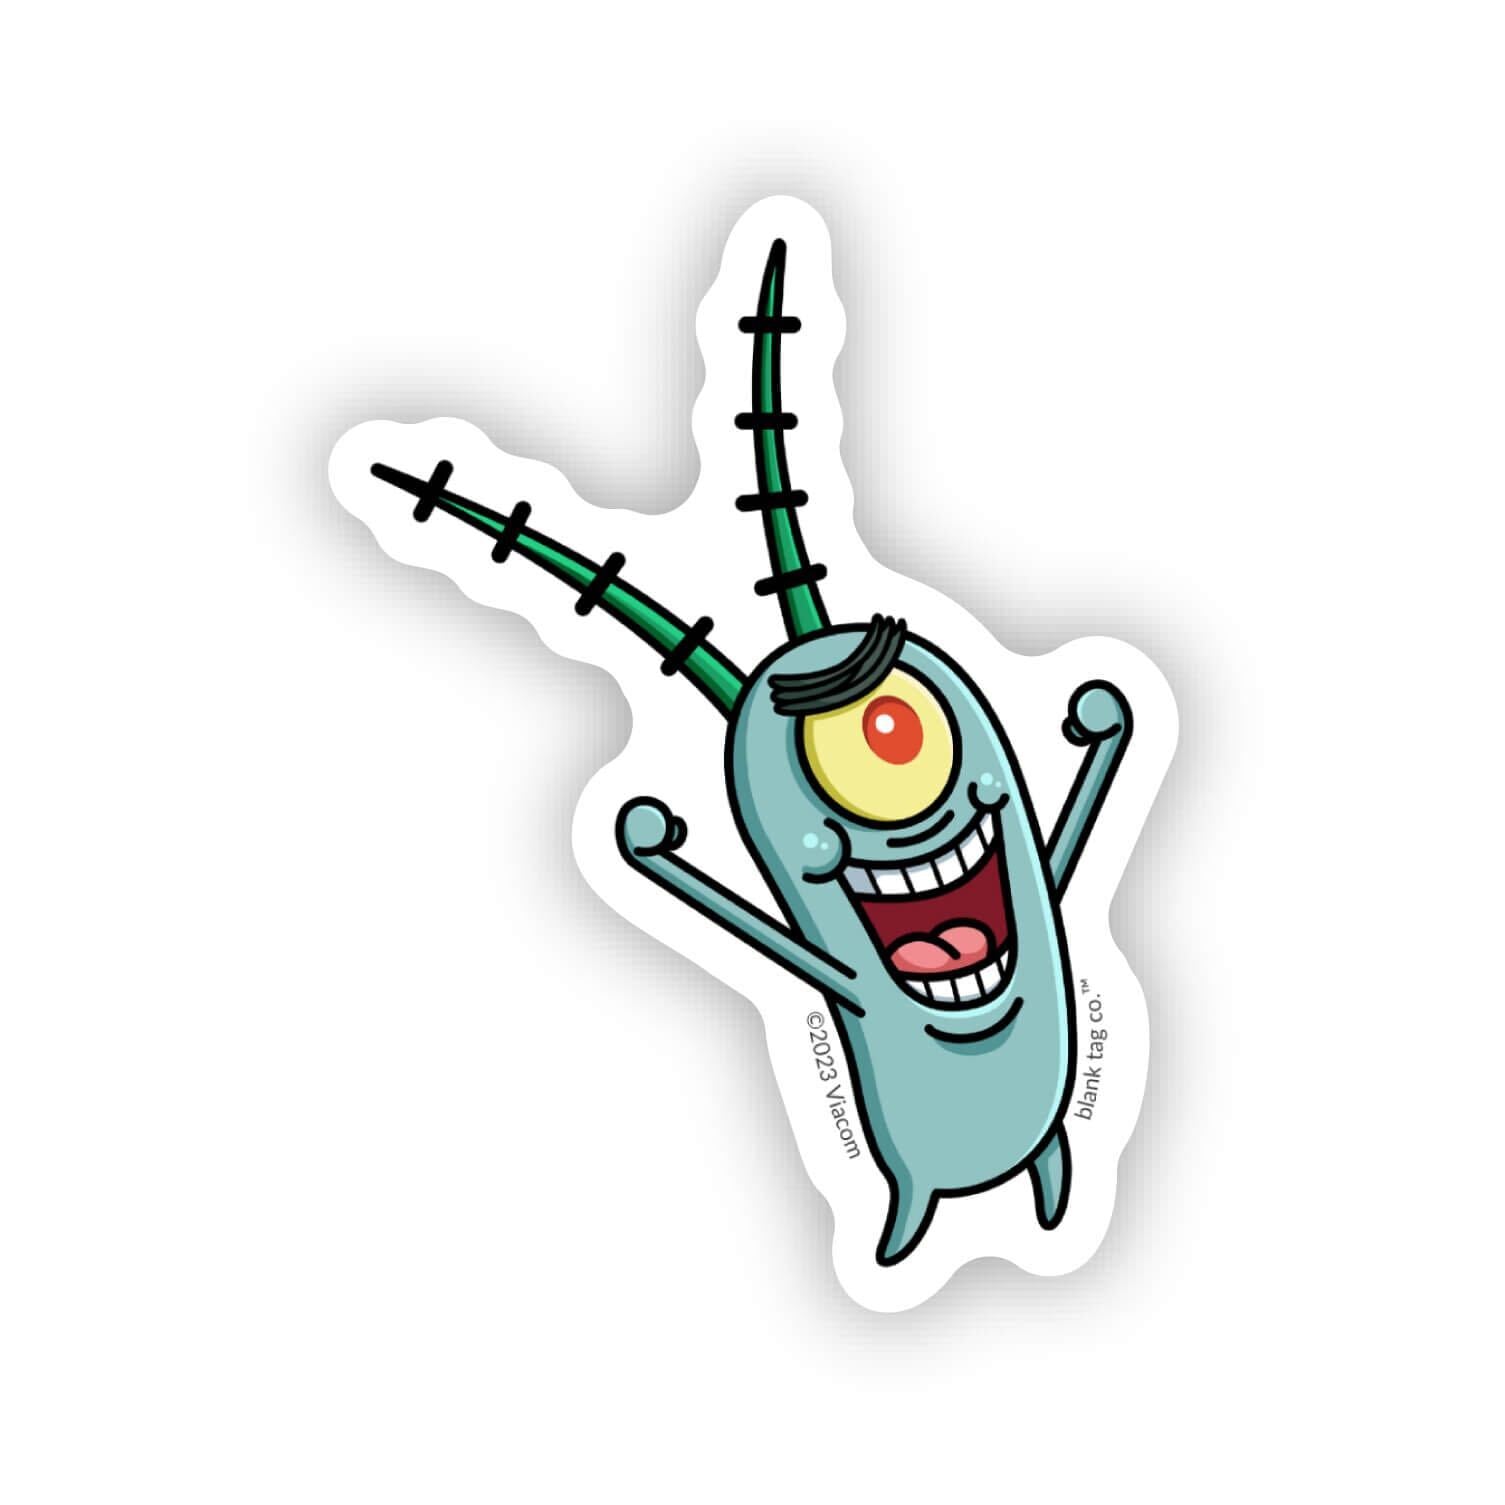 The Sheldon J. Plankton Sticker